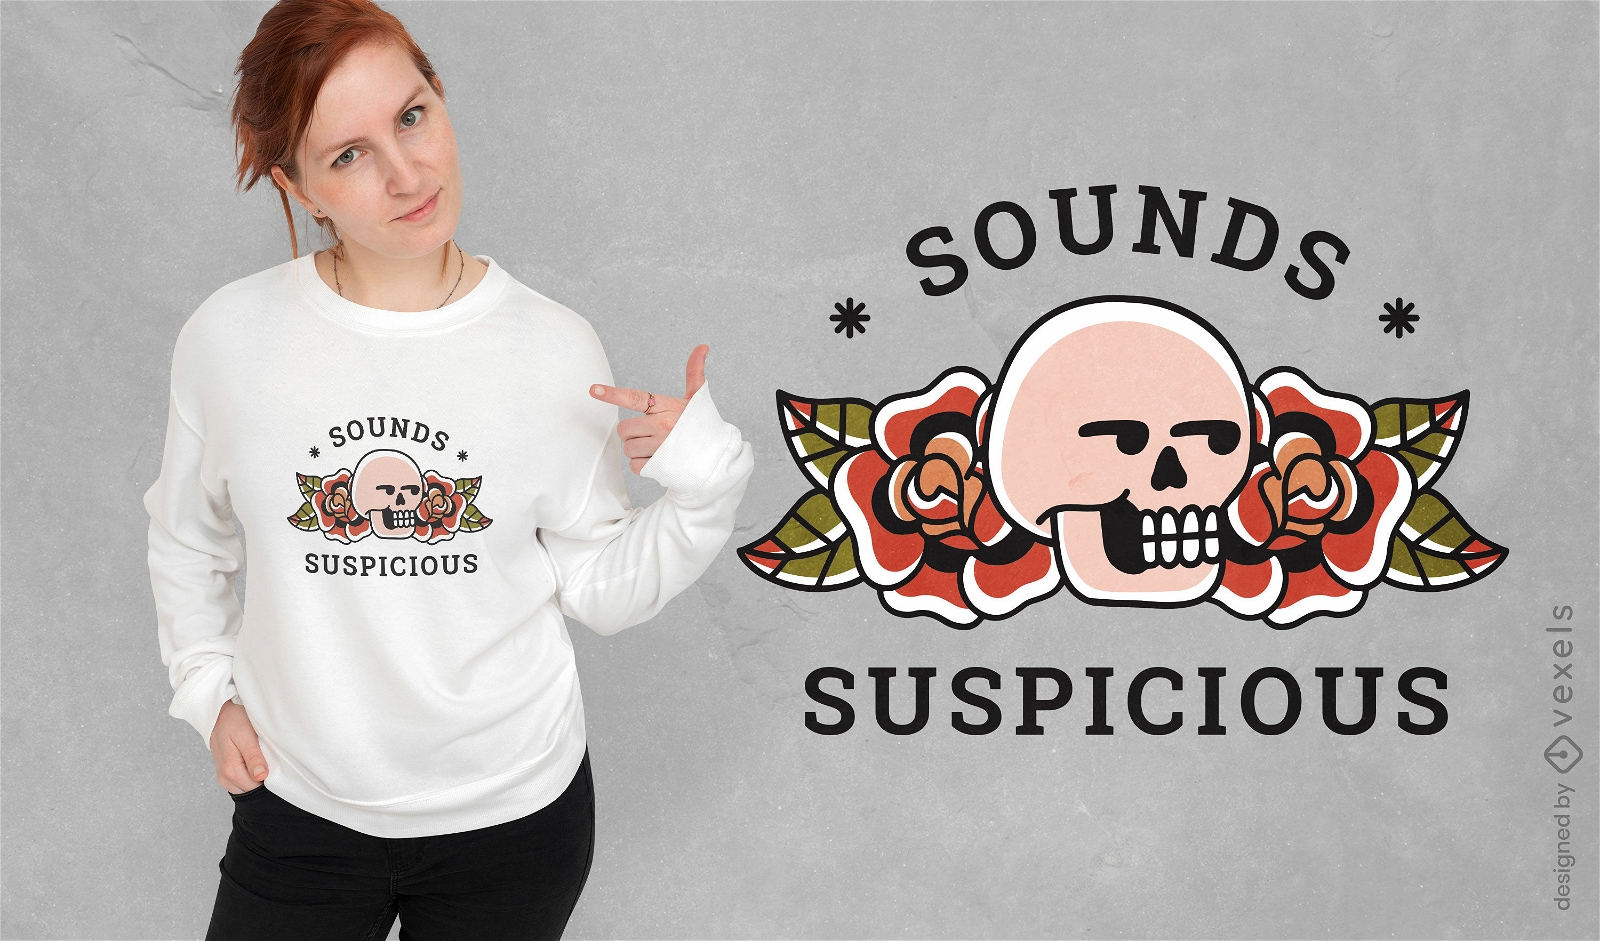 Sounds suspicious skull t-shirt design